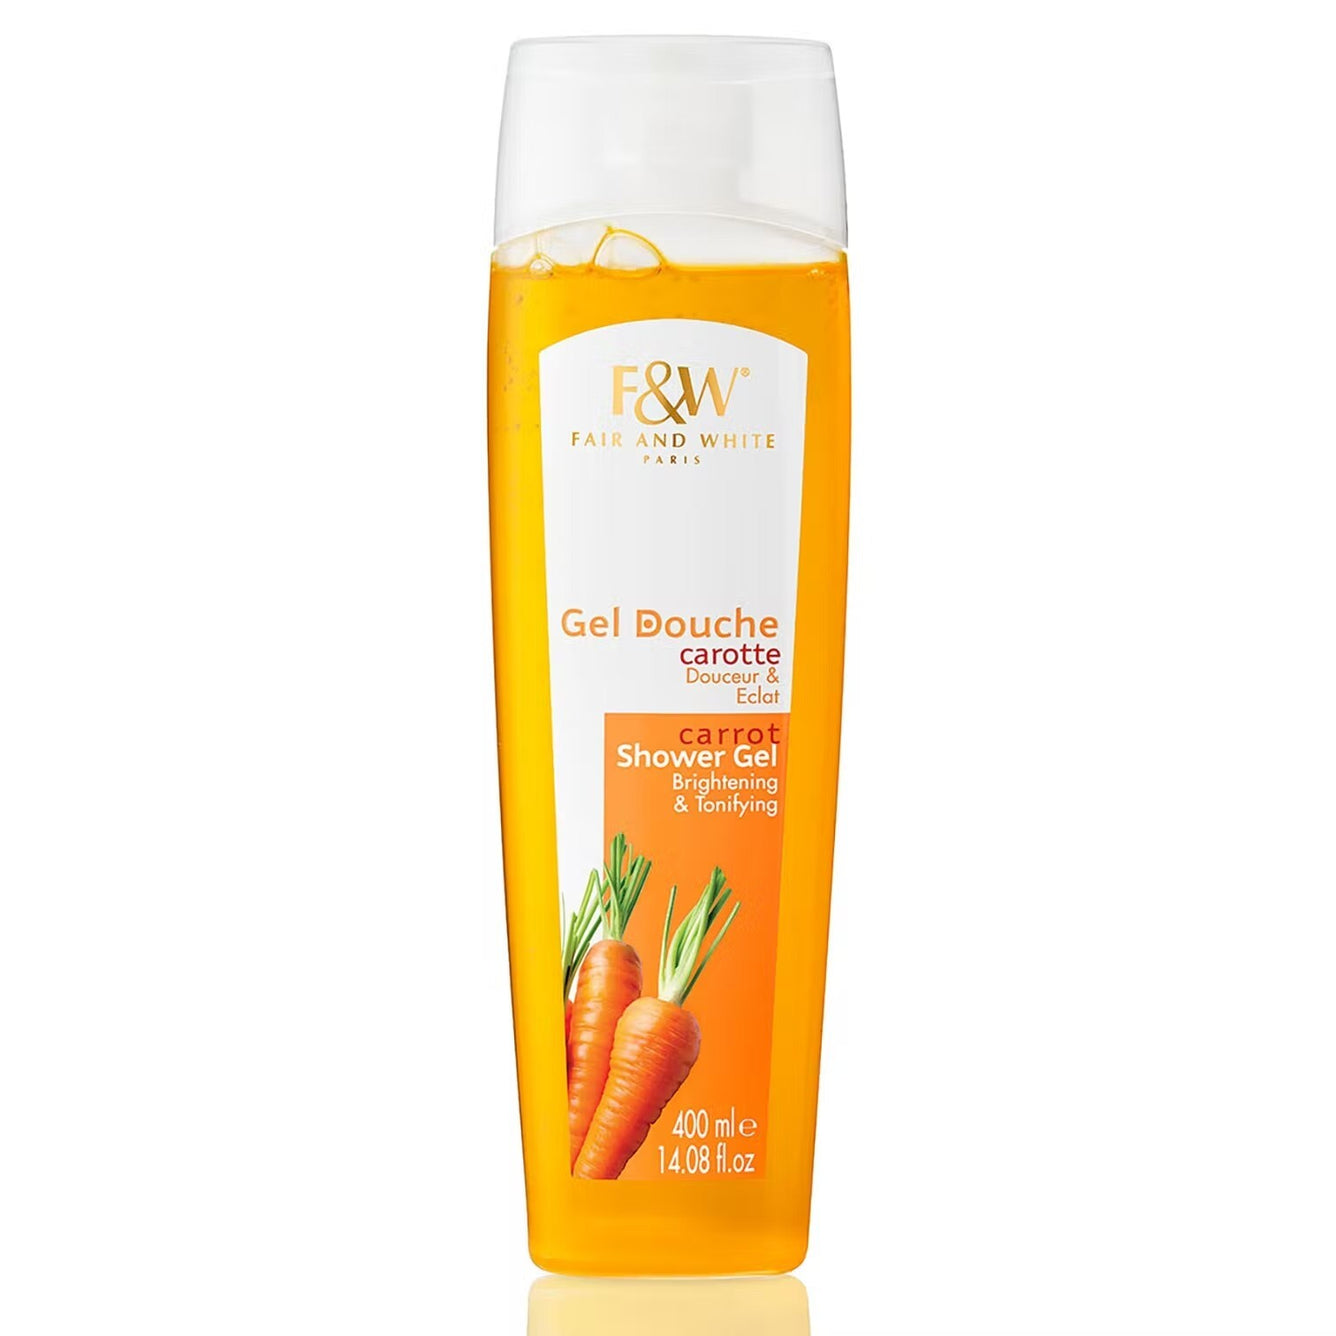 Fair & White Original Carrot Shower Gel NEW - Sweet Fragrance - 400ml / 14.08 fl oz Mitchell Brands - Mitchell Brands - Skin Lightening, Skin Brightening, Fade Dark Spots, Shea Butter, Hair Growth Products